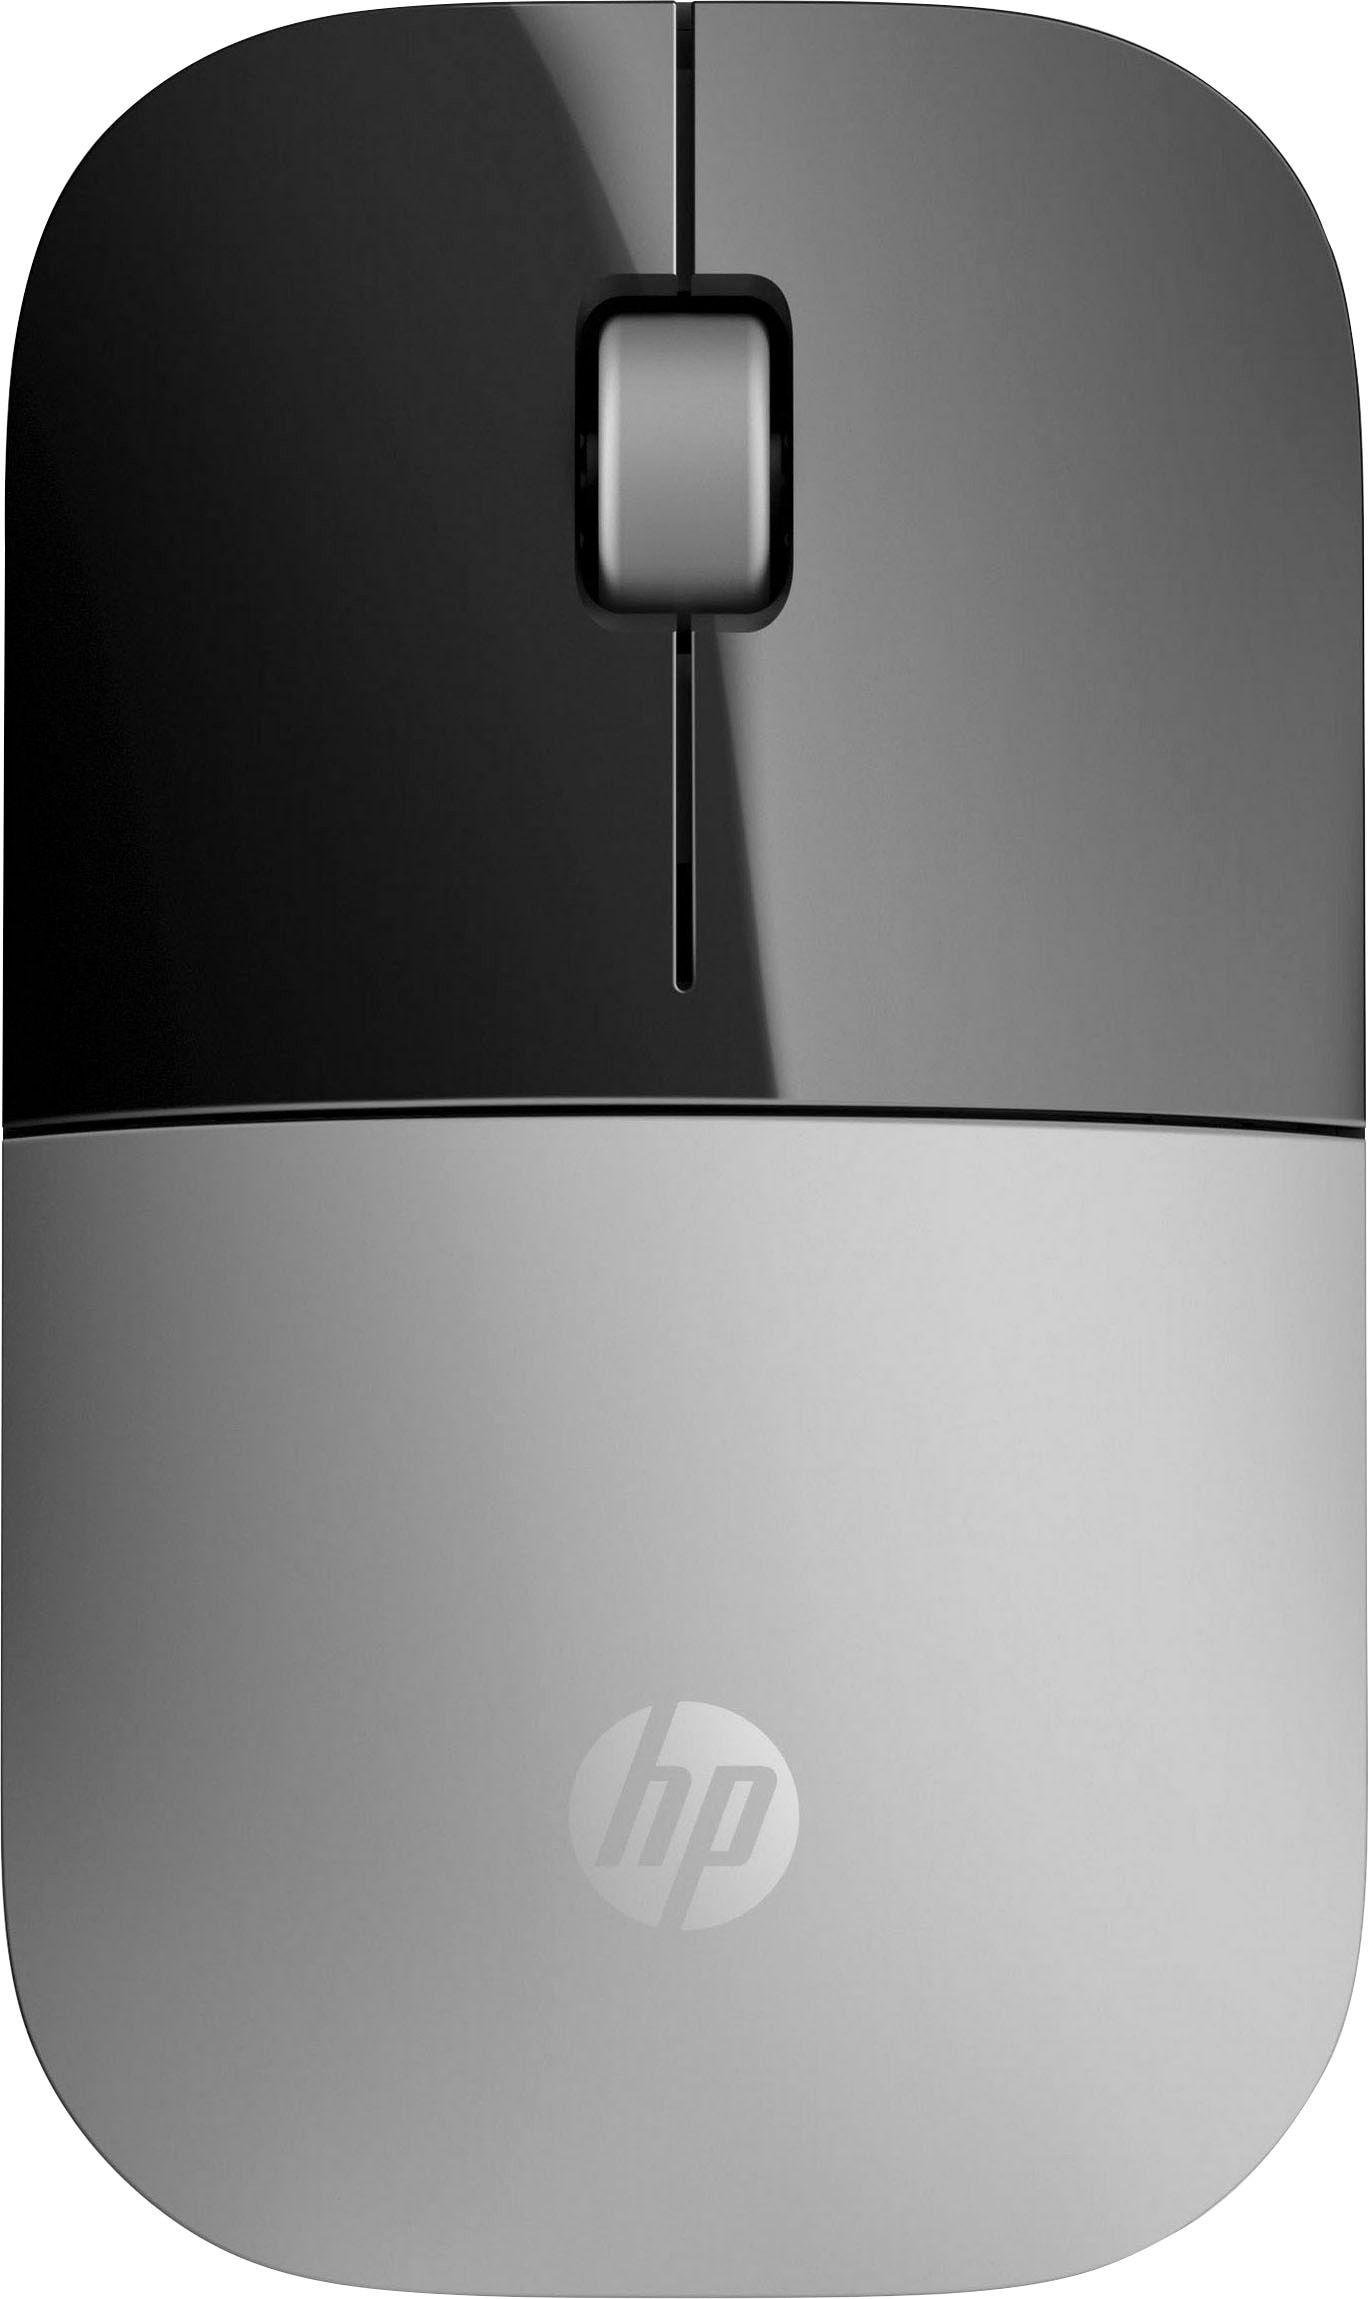 HP Maus »Z3700«